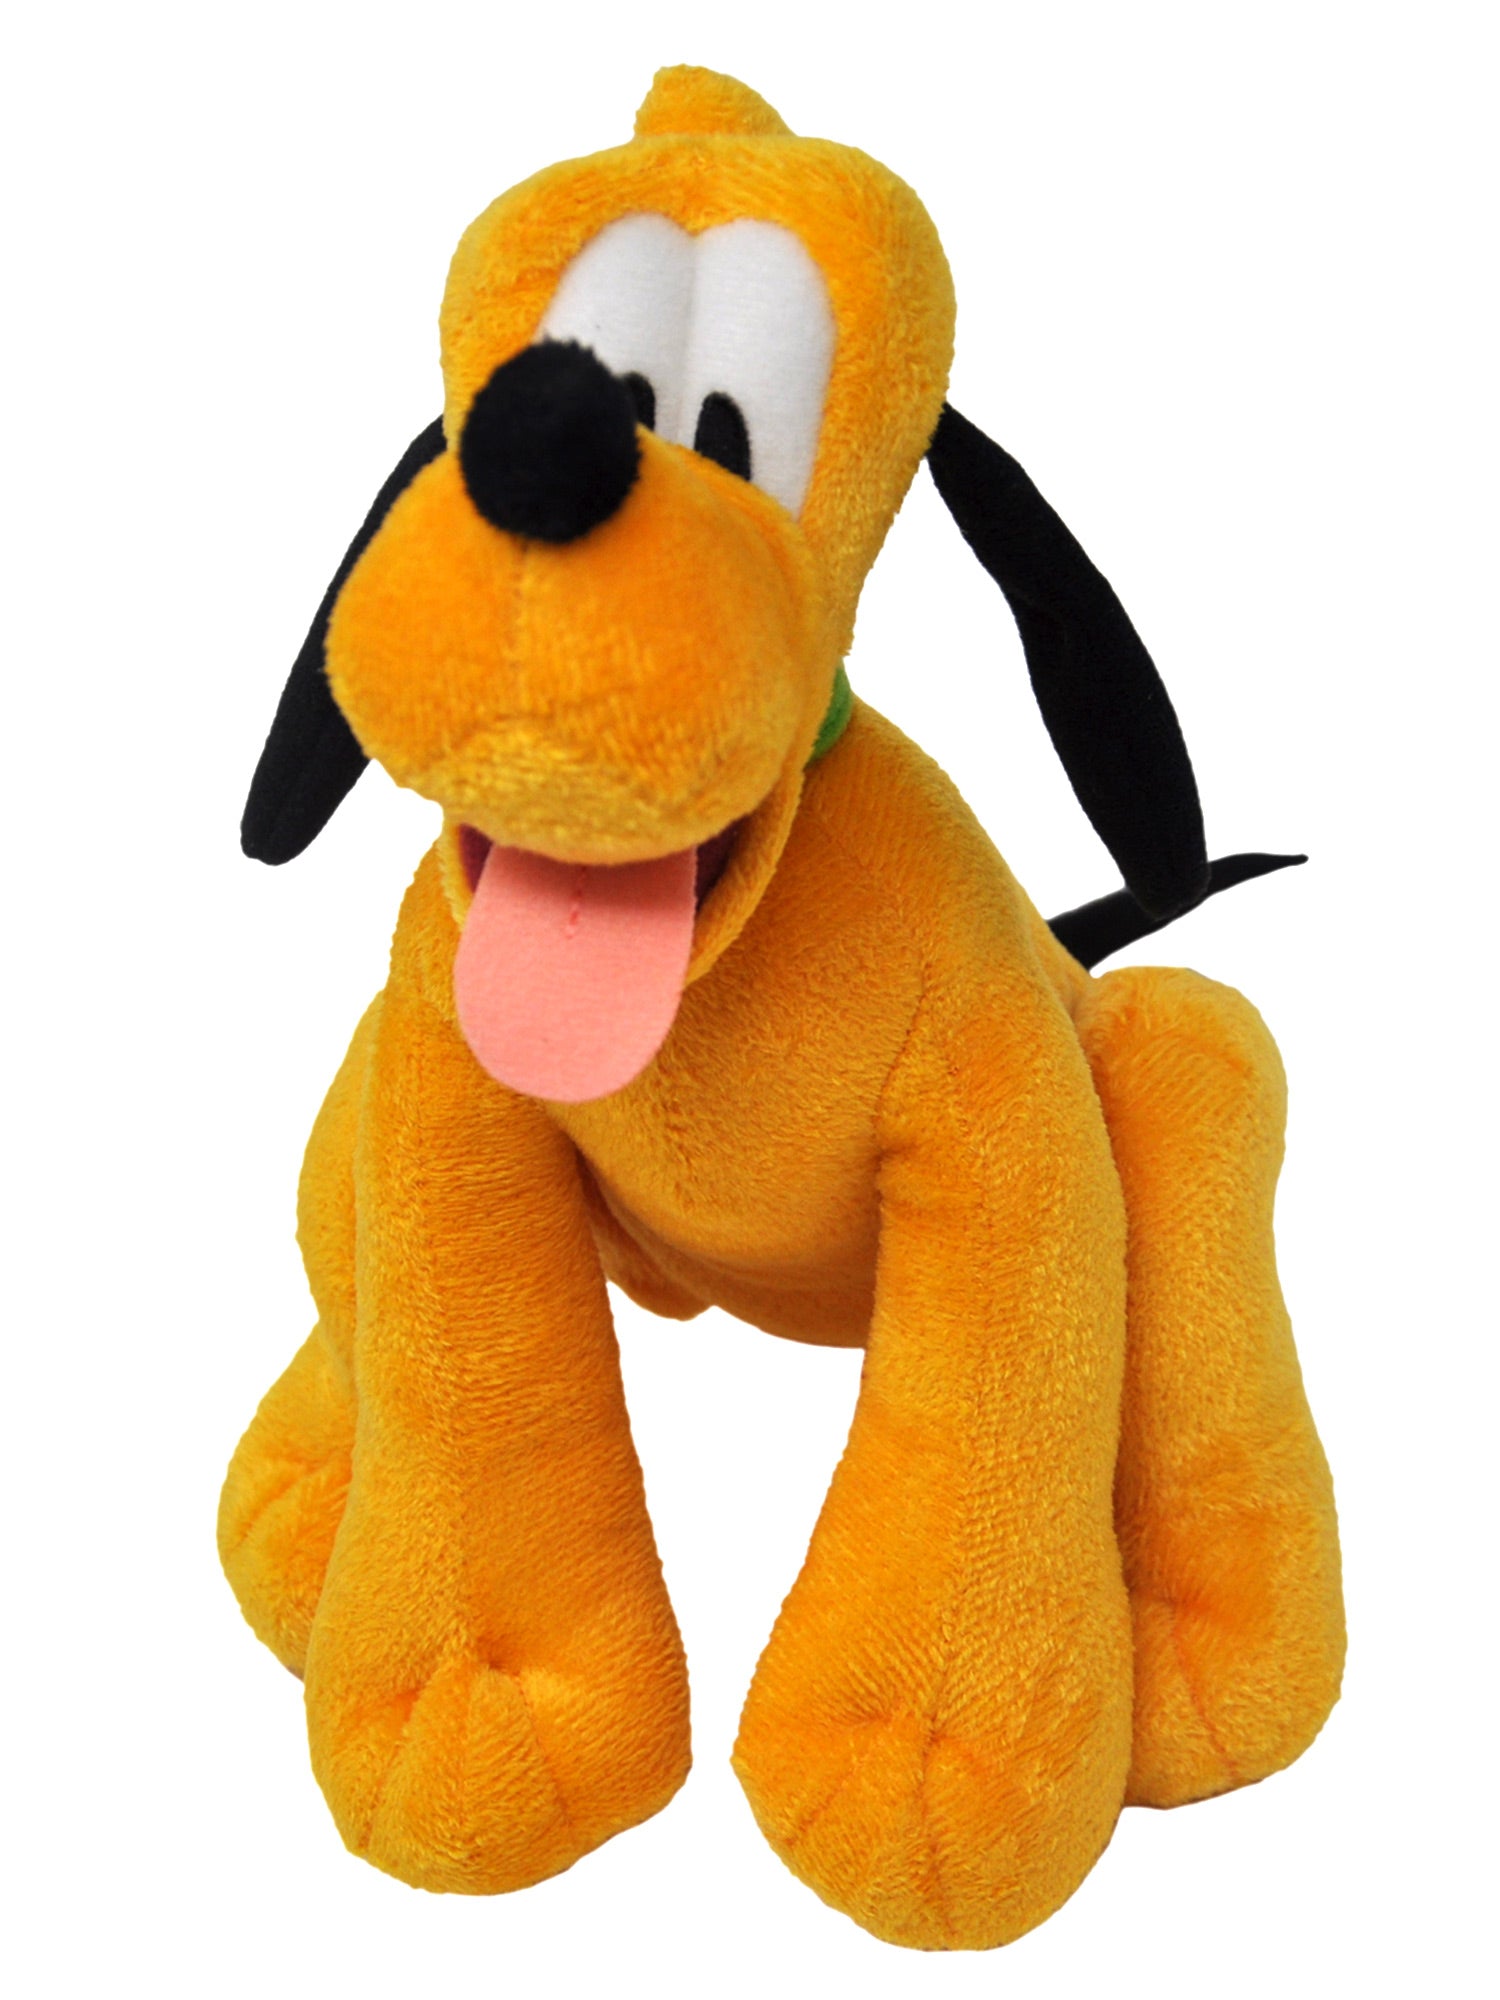 Disney Pluto Plush Doll Toy 9" Stuffed Animal